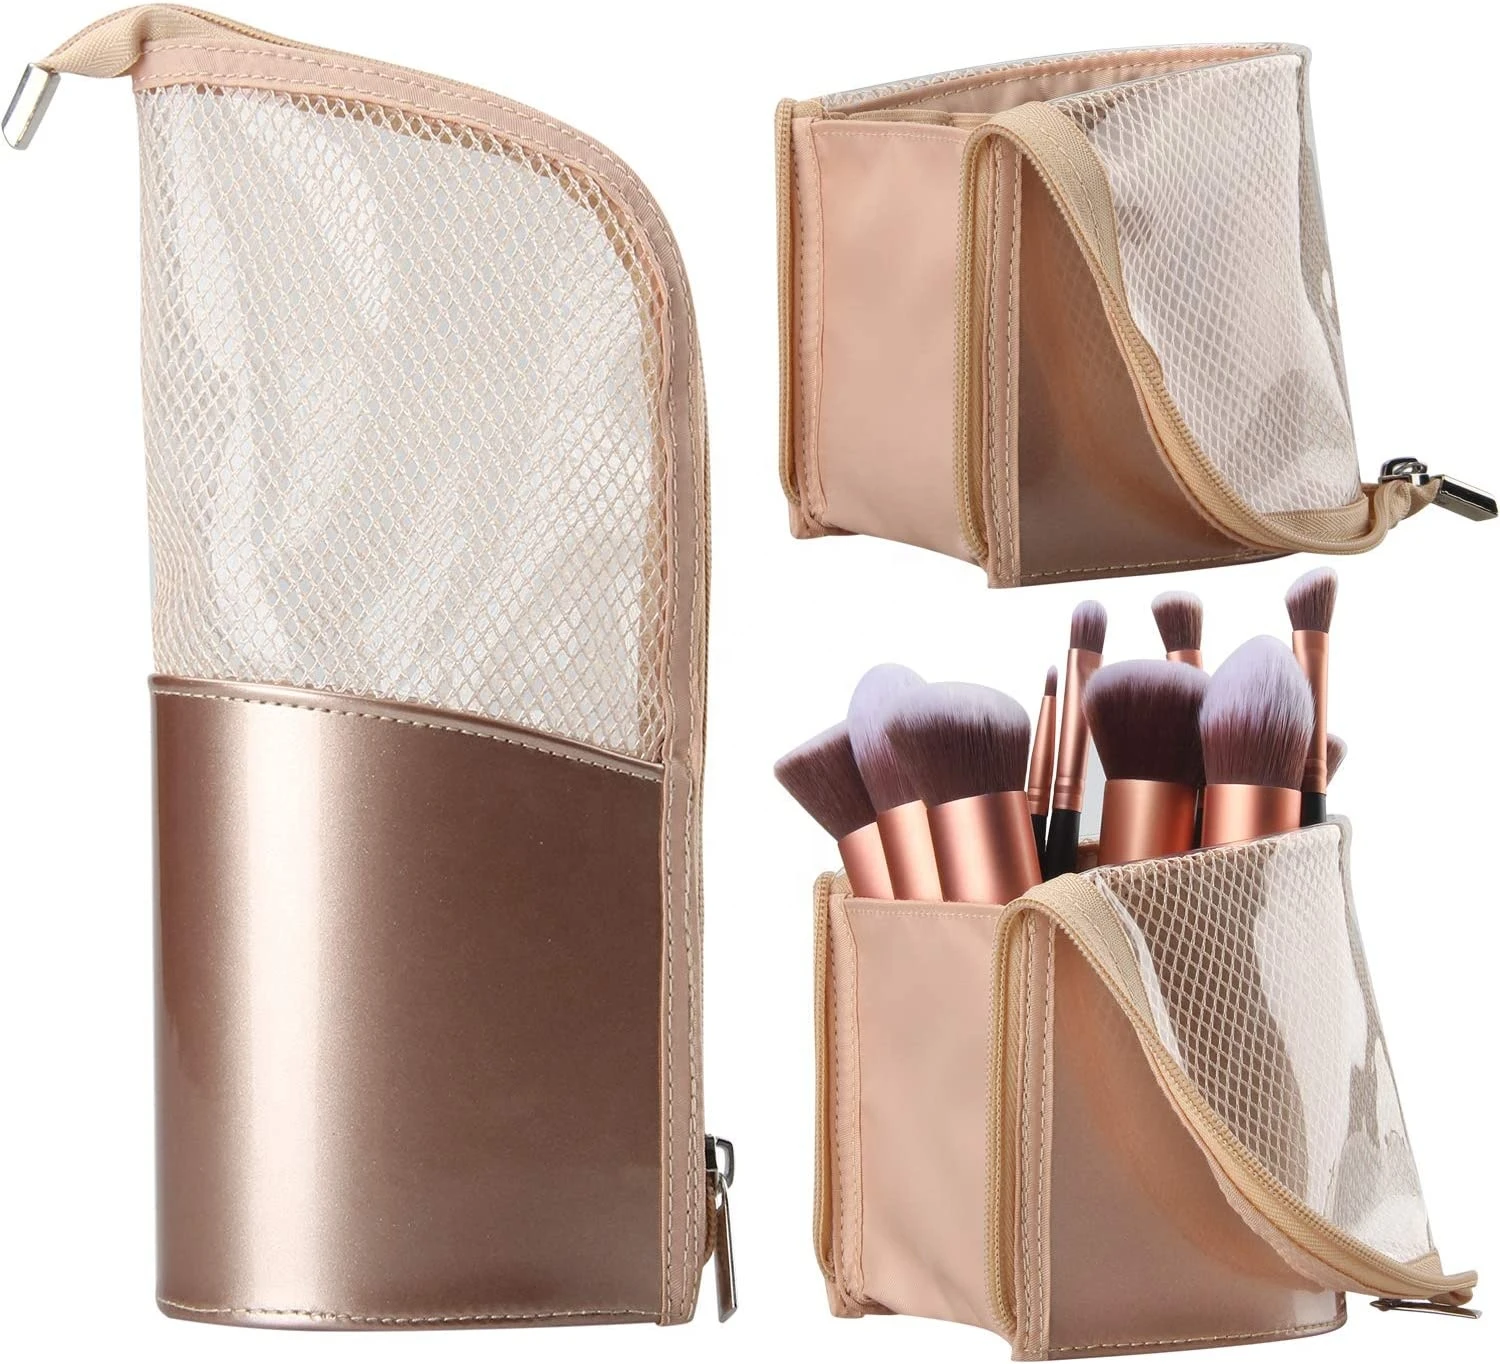 Micani hot selling portable rose gold makeup brush holder organizer bag waterproof stand-up ziplock cosmetic bag